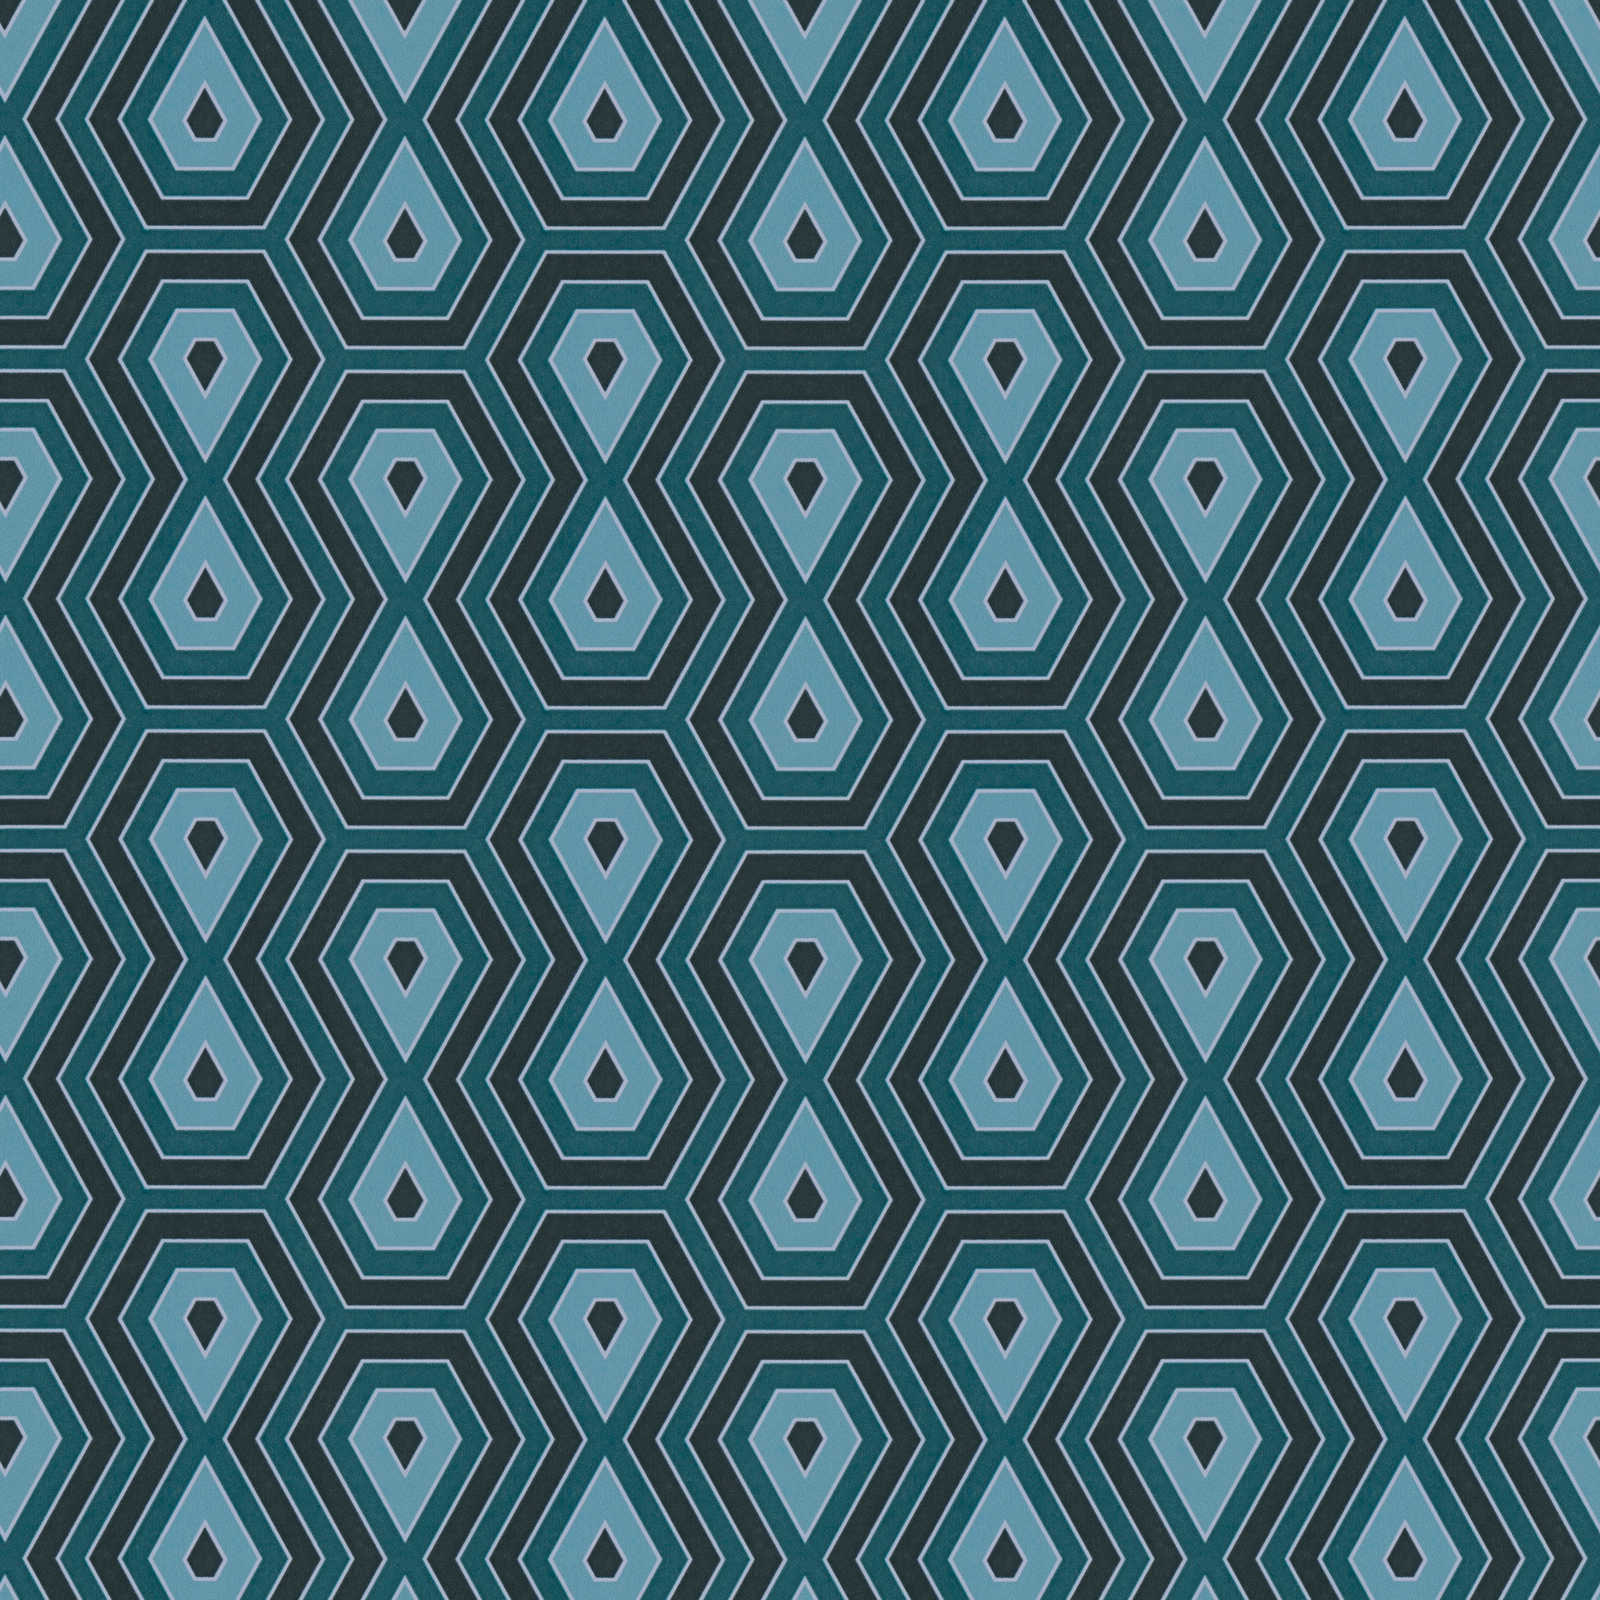 Wallpaper turquoise graphic diamond pattern in retro style - blue, black
